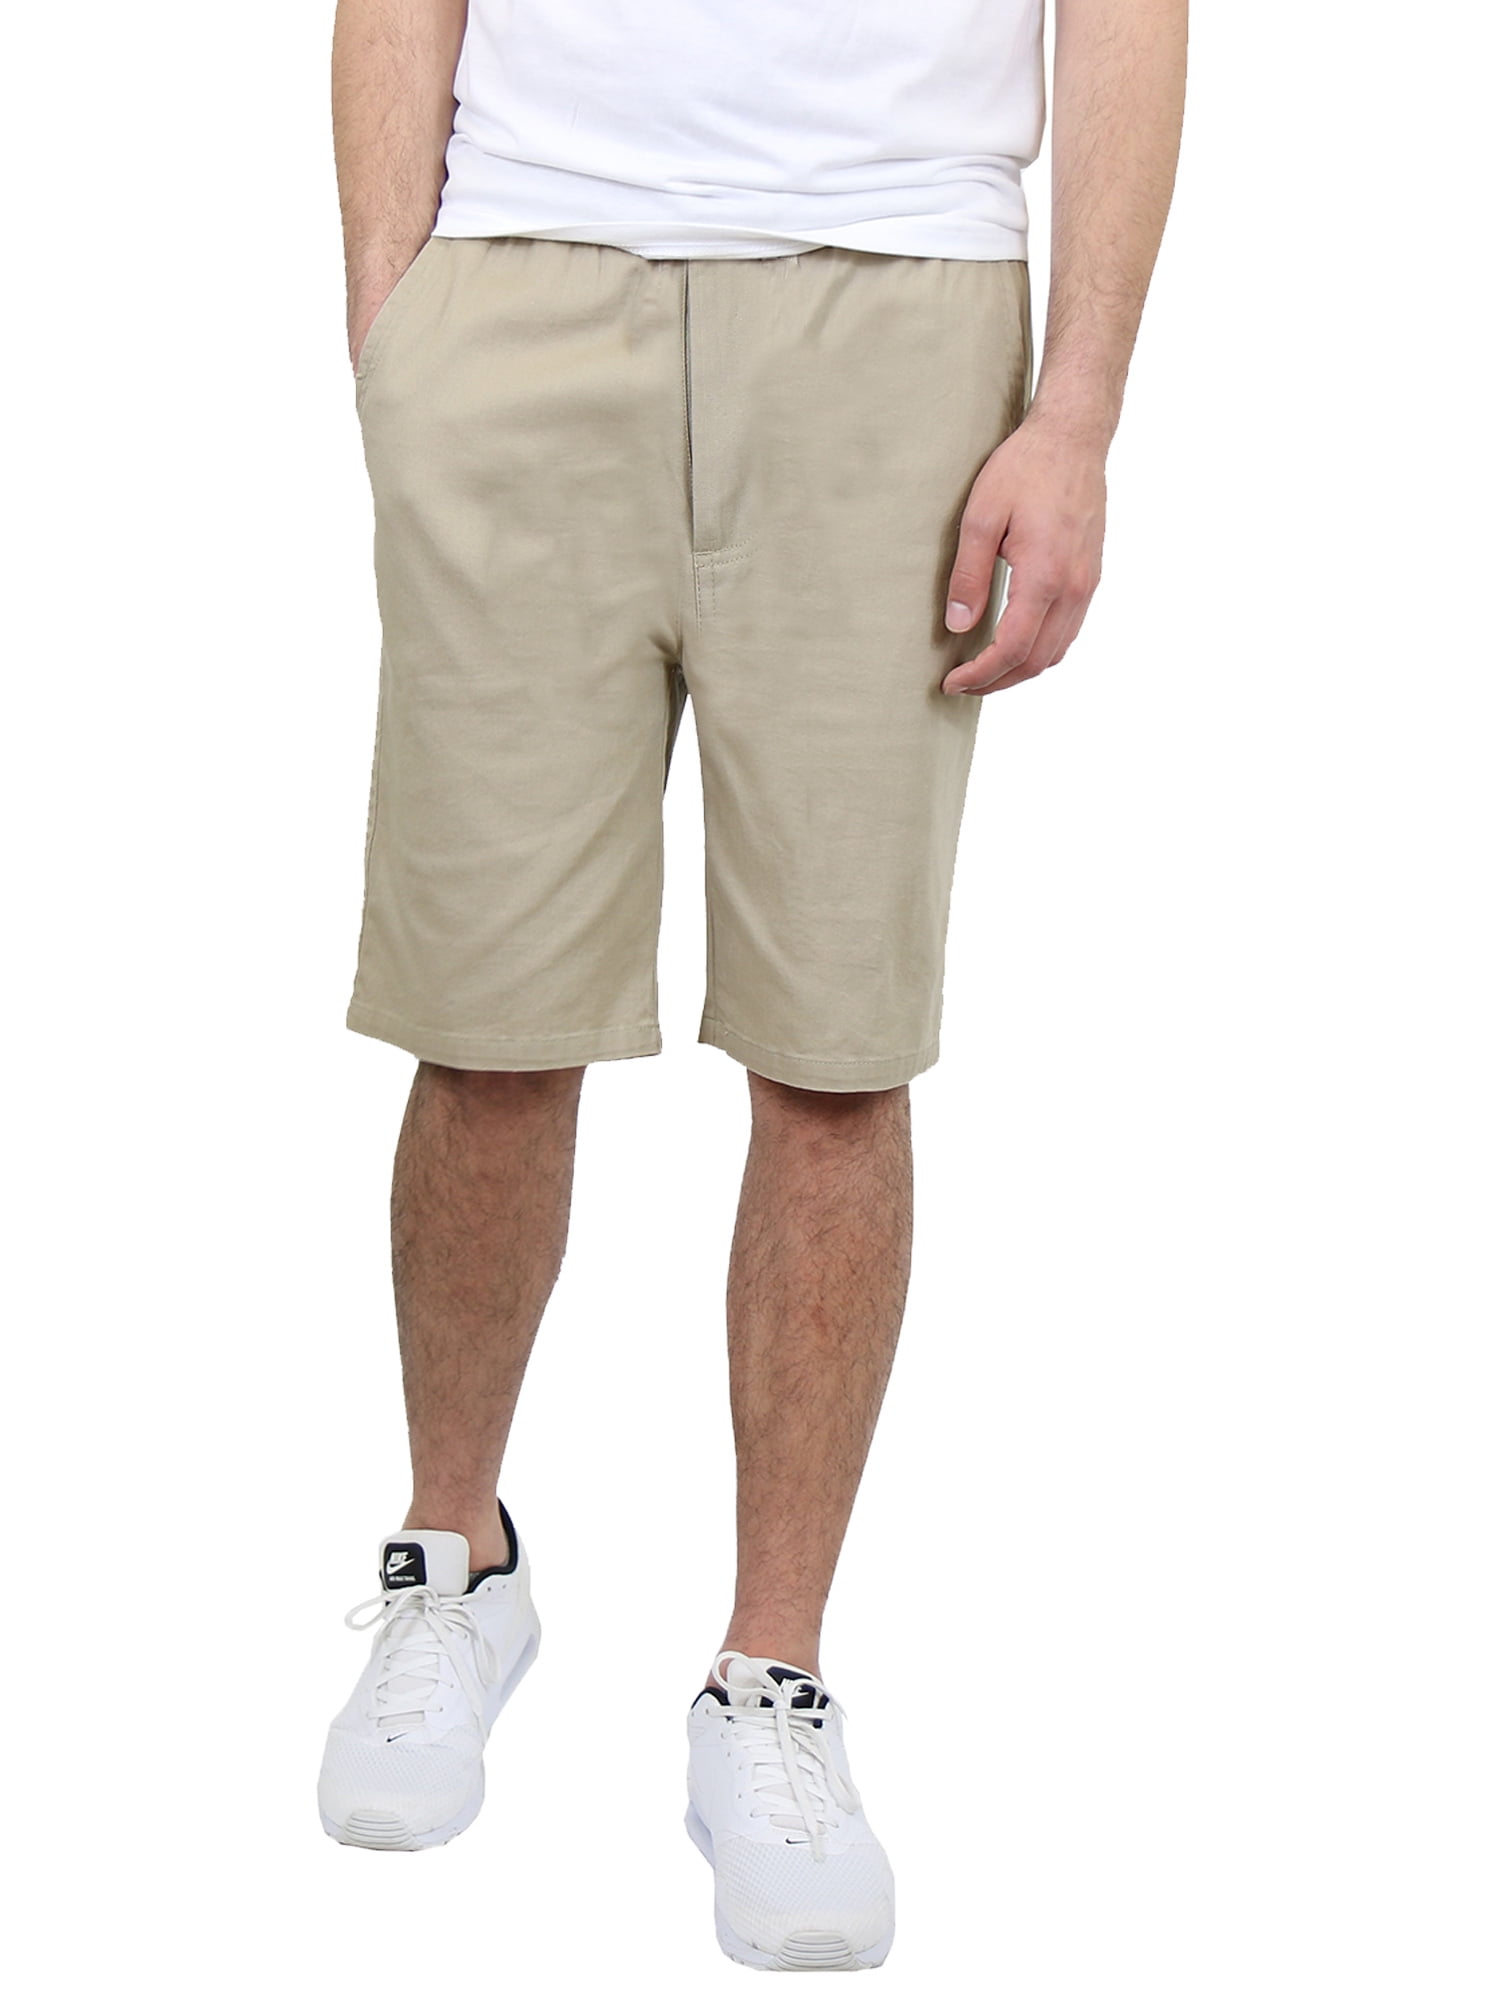 Men's Cotton Chino Shorts with Belt (Sizes 30-42) - Walmart.com